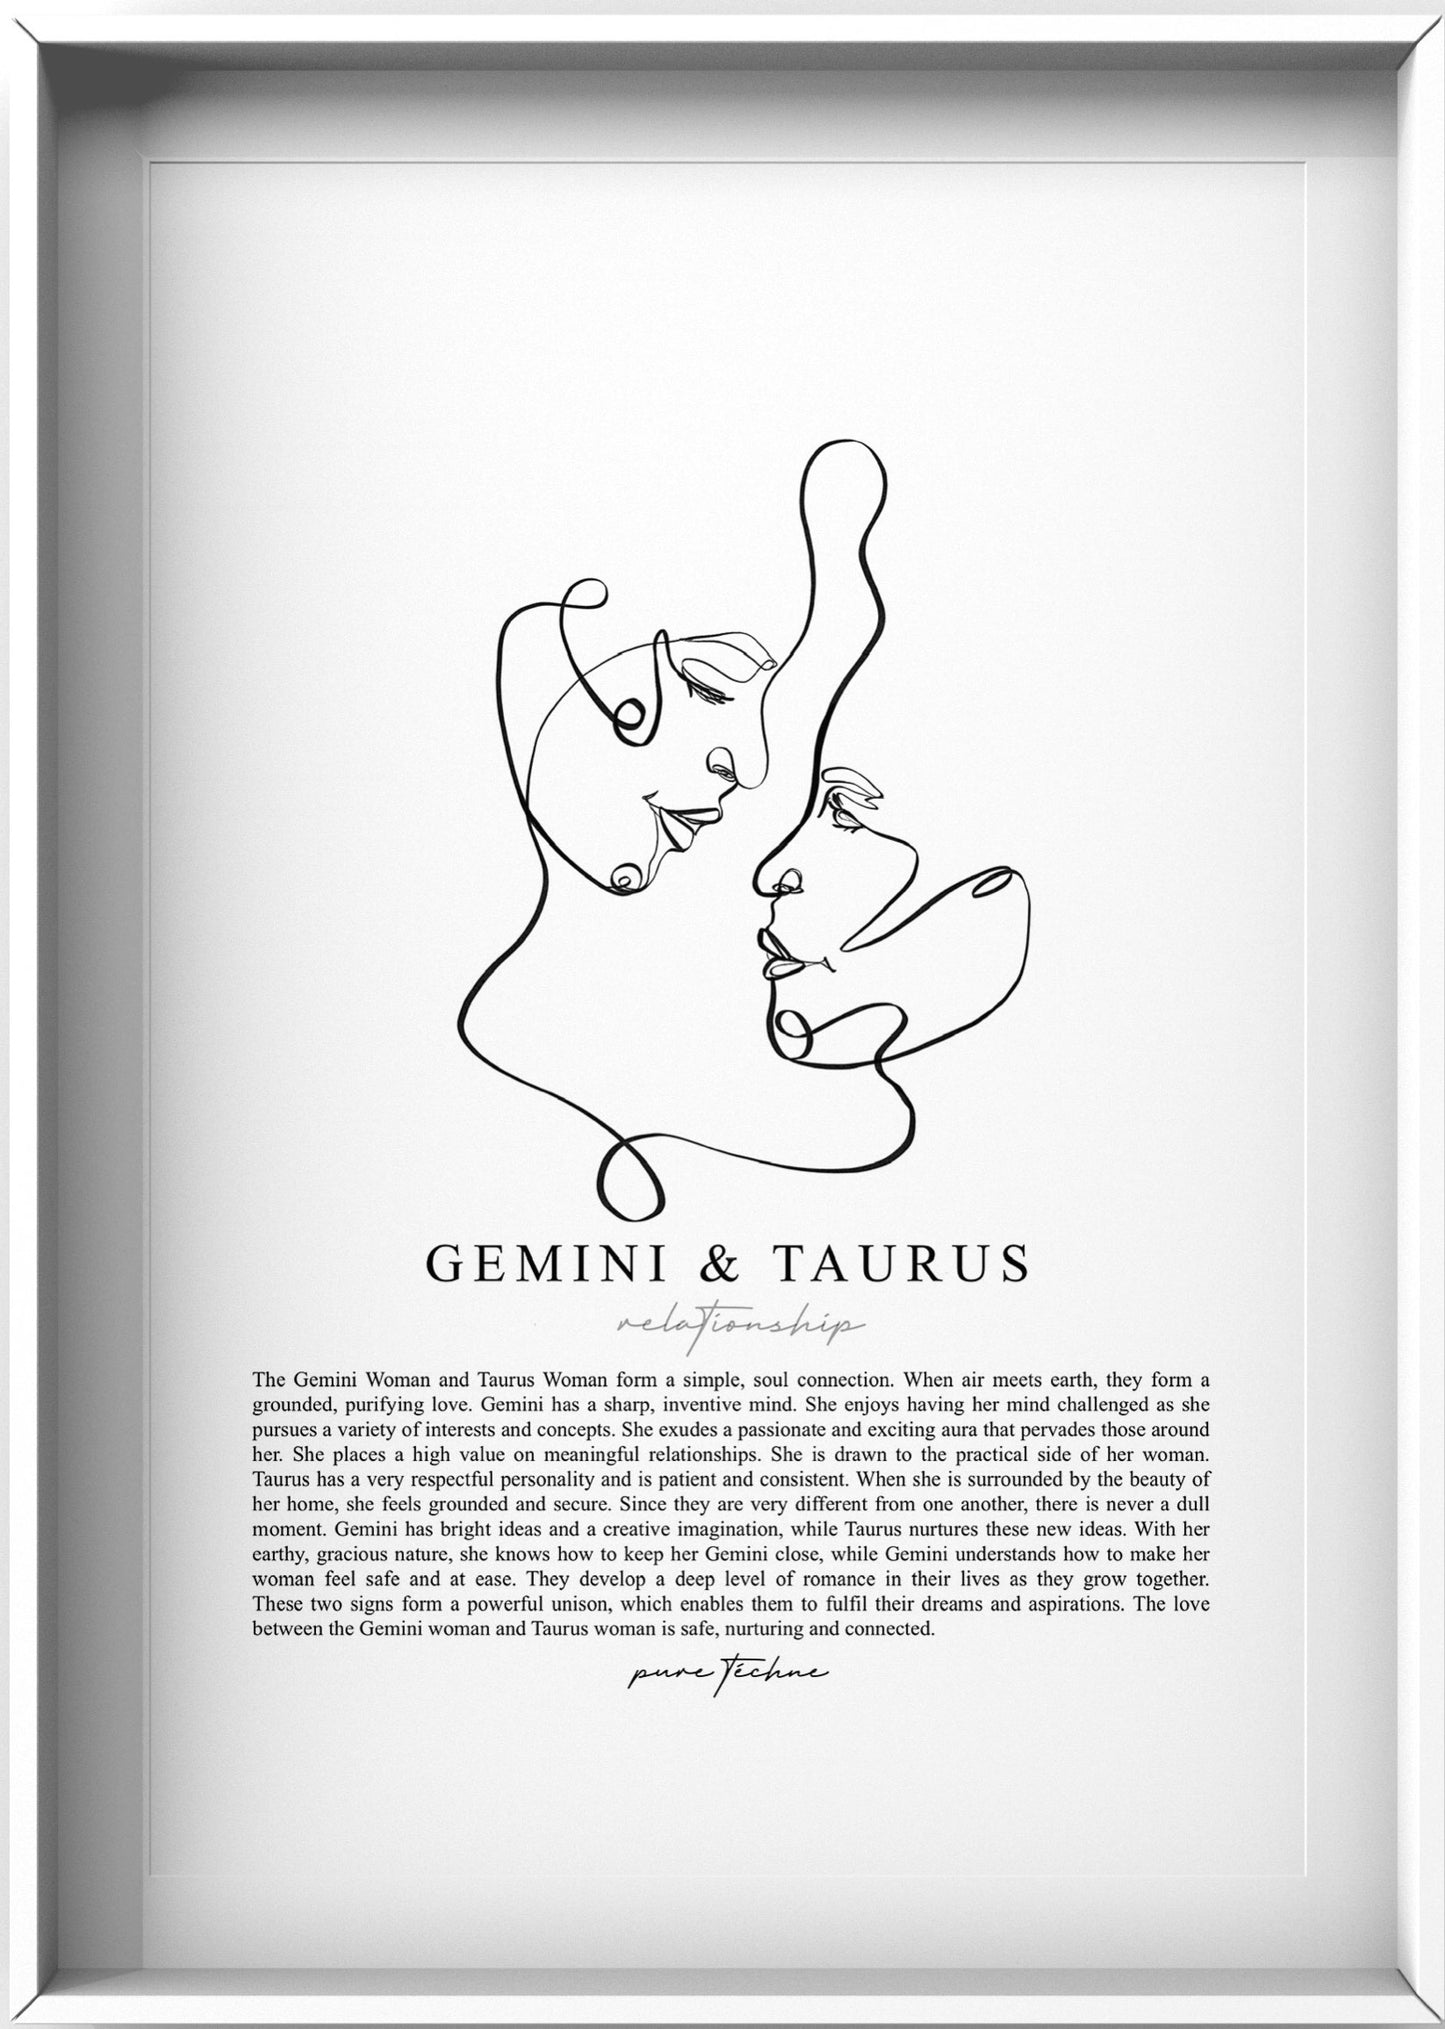 Gemini Woman & Taurus Woman